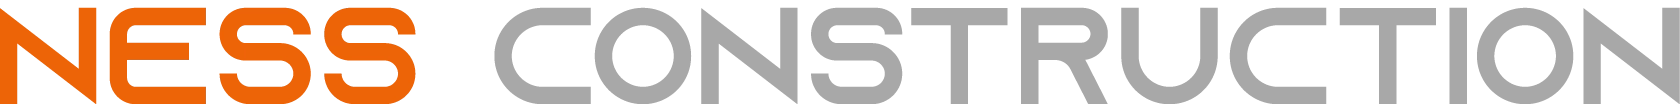 Ness Construction Logo